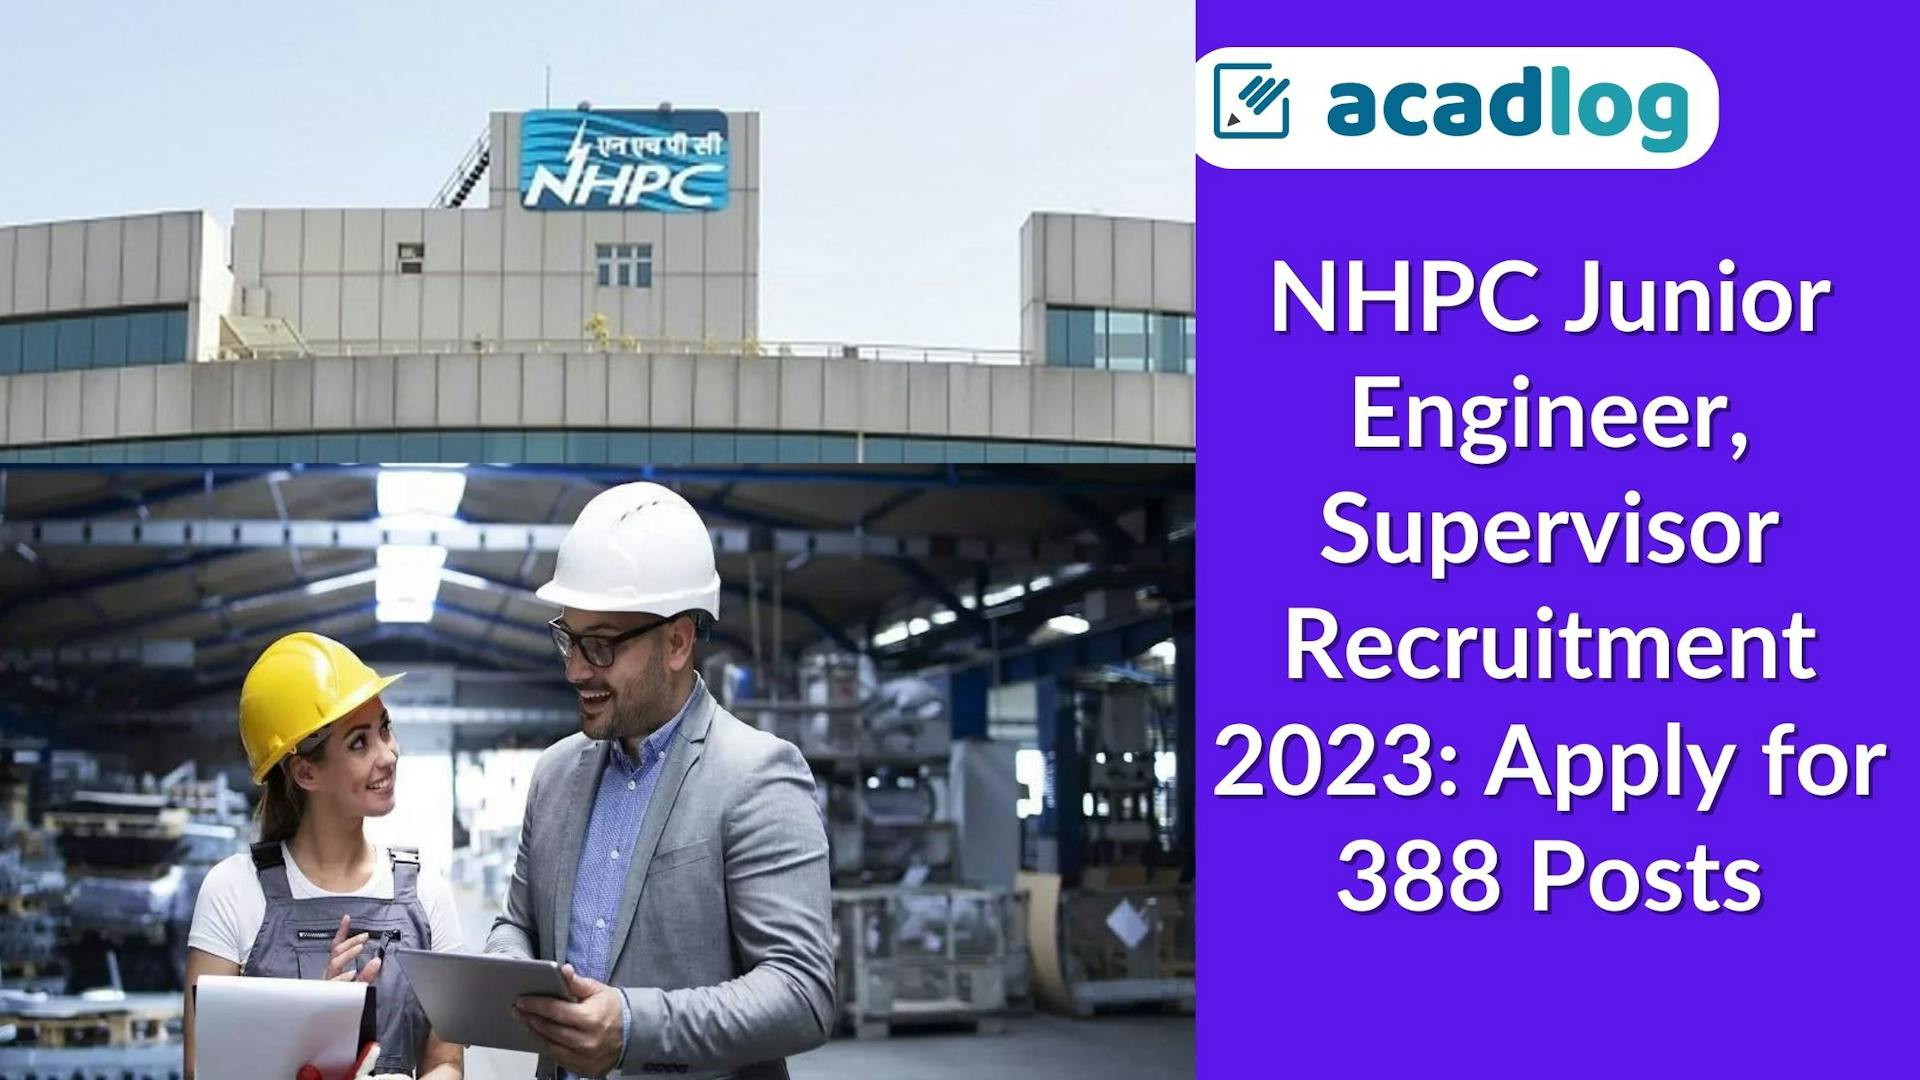 NHPC Junior Engineer, Supervisor Recruitment 2023: Apply for 388 Posts